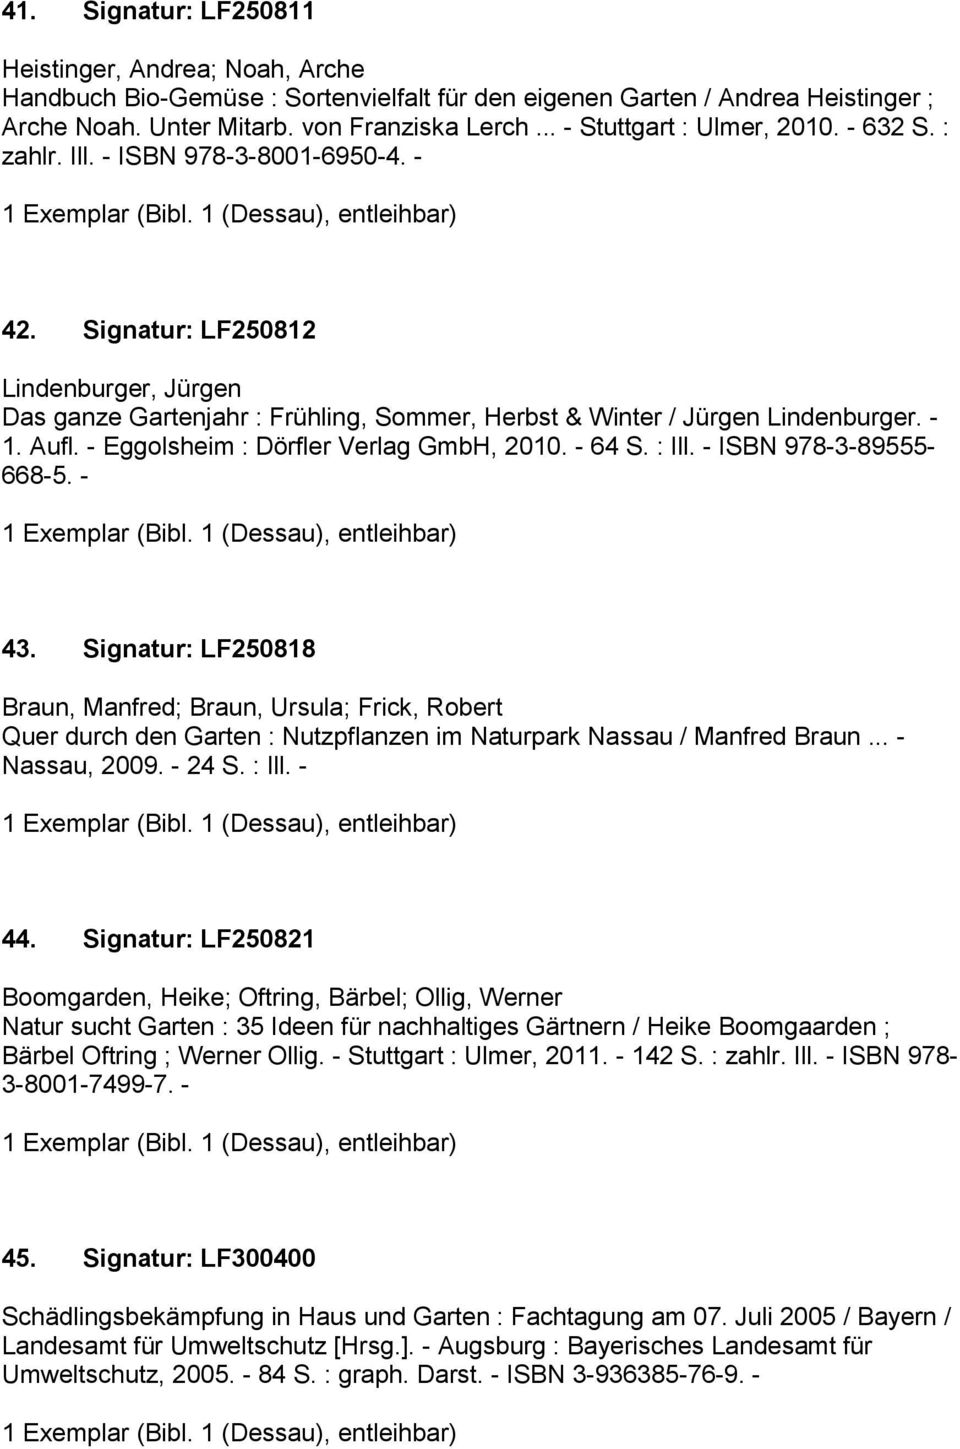 Signatur: LF250812 Lindenburger, Jürgen Das ganze Gartenjahr : Frühling, Sommer, Herbst & Winter / Jürgen Lindenburger. - 1. Aufl. - Eggolsheim : Dörfler Verlag GmbH, 2010. - 64 S. : Ill.